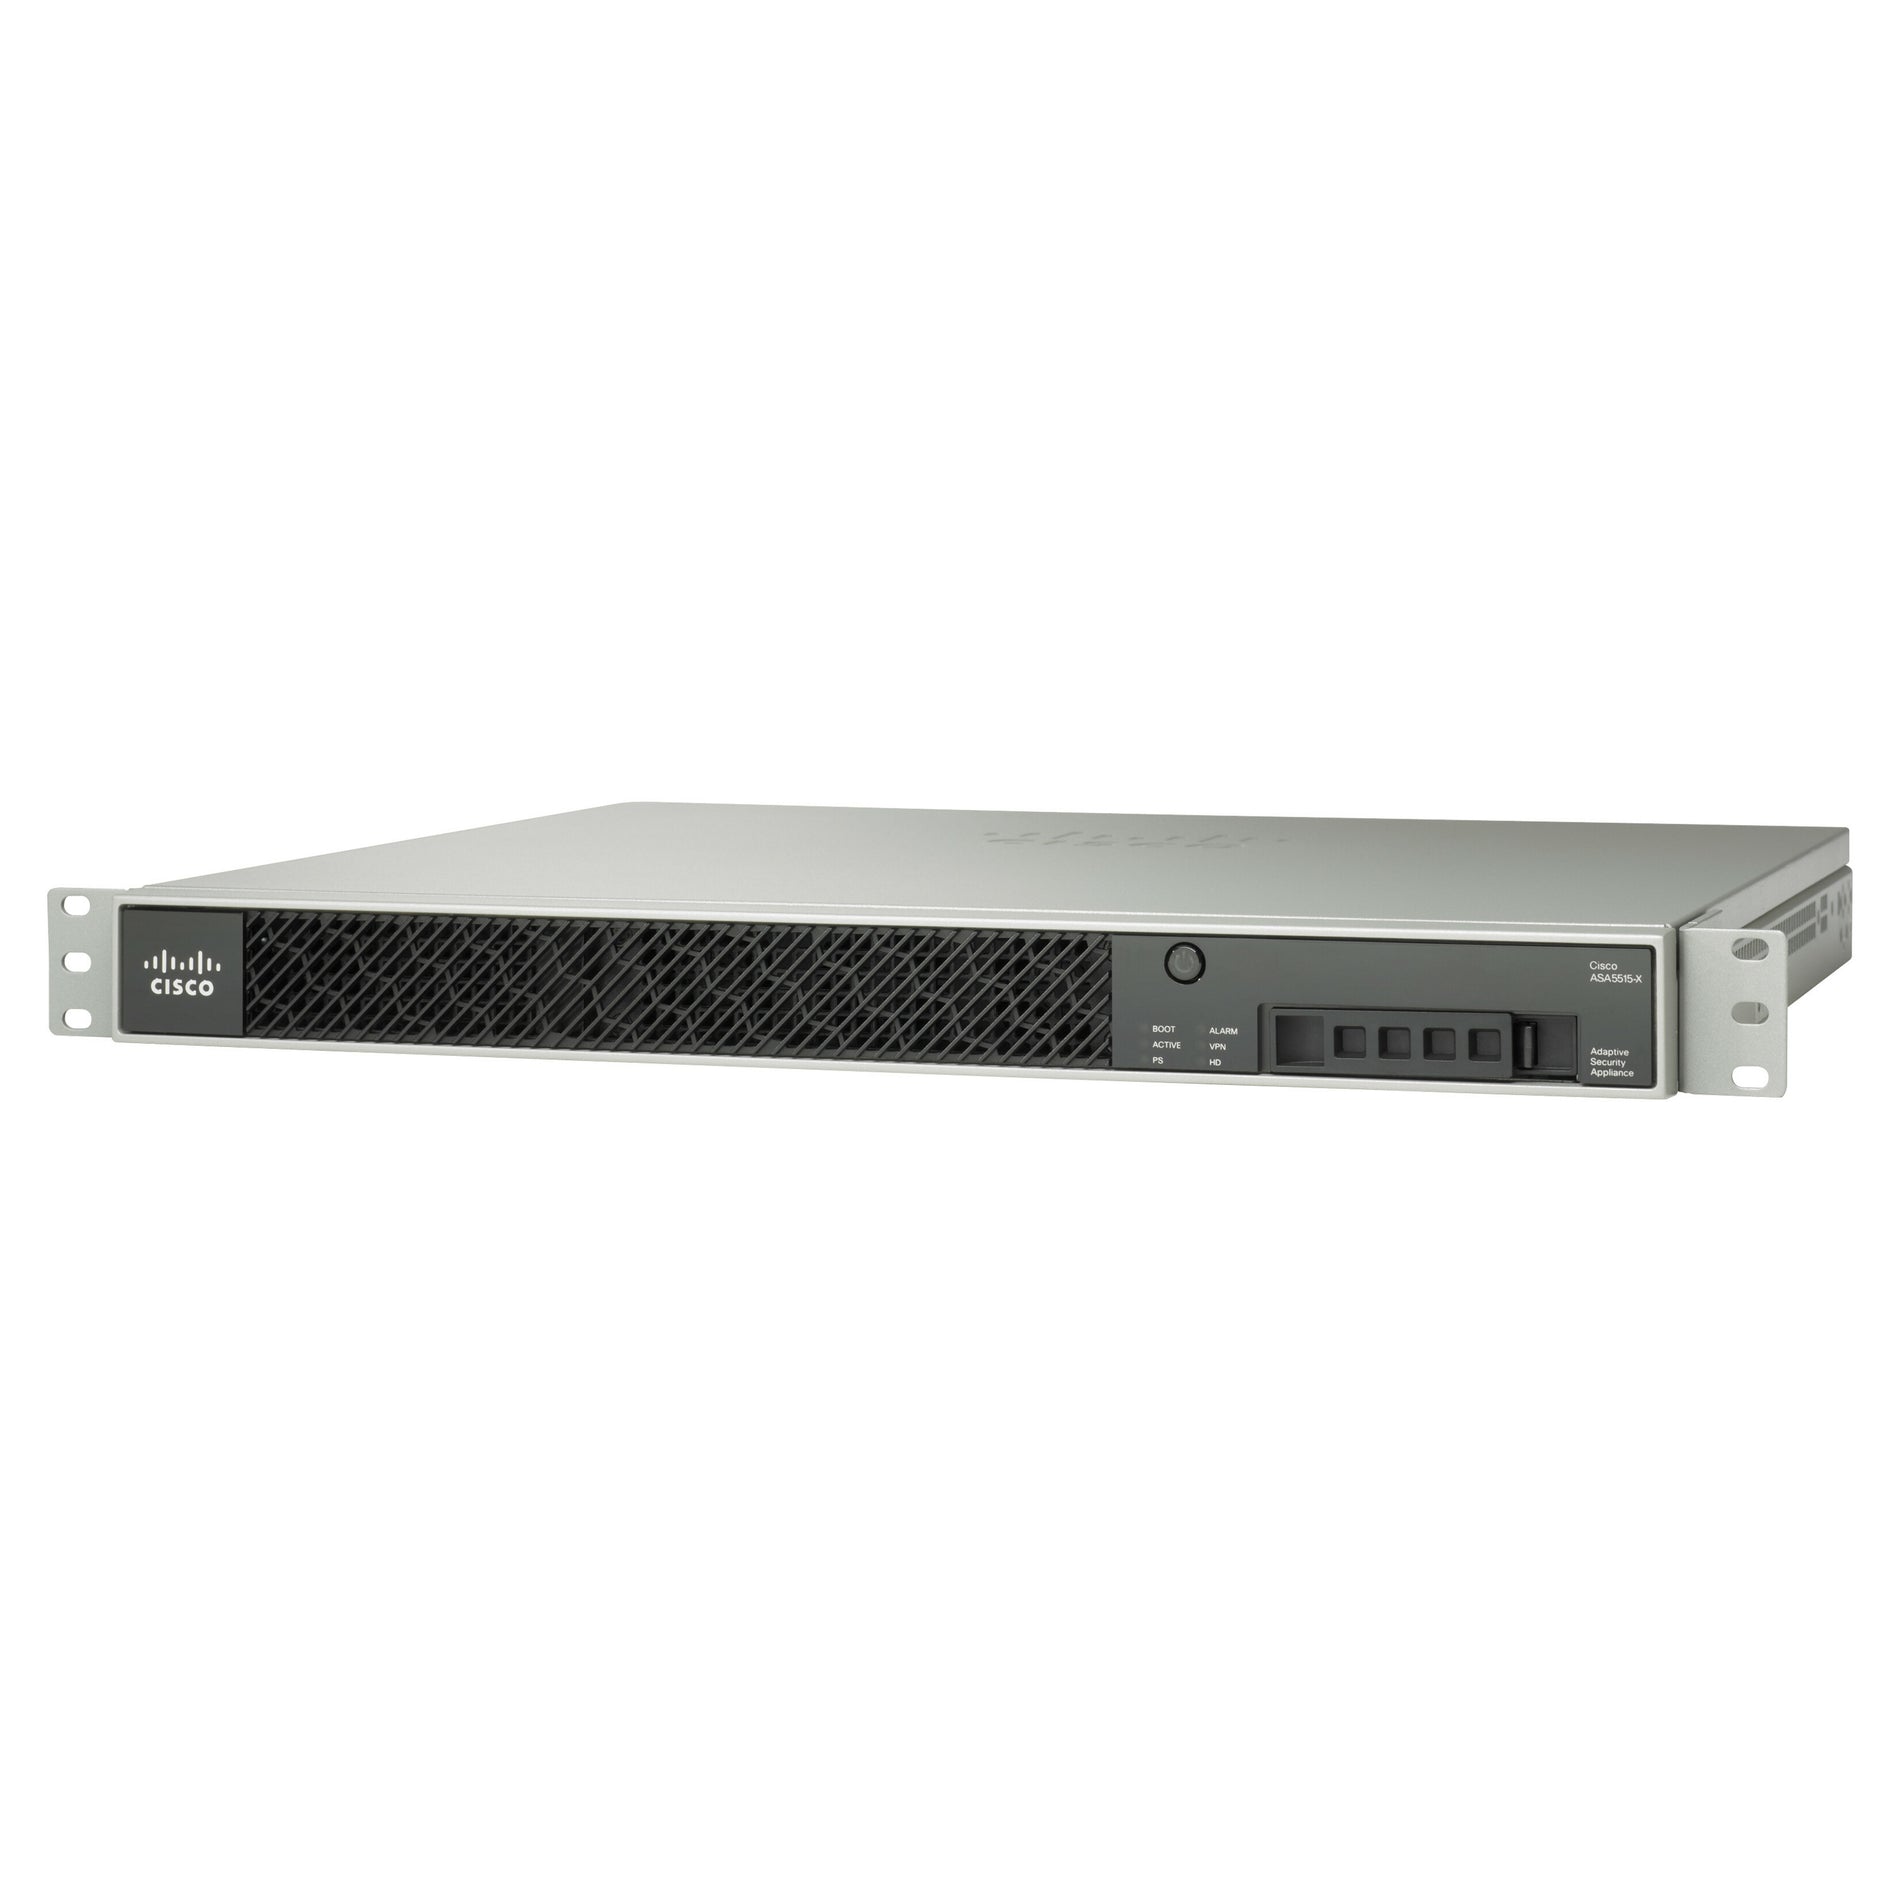 Cisco-IMSourcing ASA5515-X FIREWALL EDITION DISC PROD SPCL SOURCING SEE NOTES (ASA5515-K9)